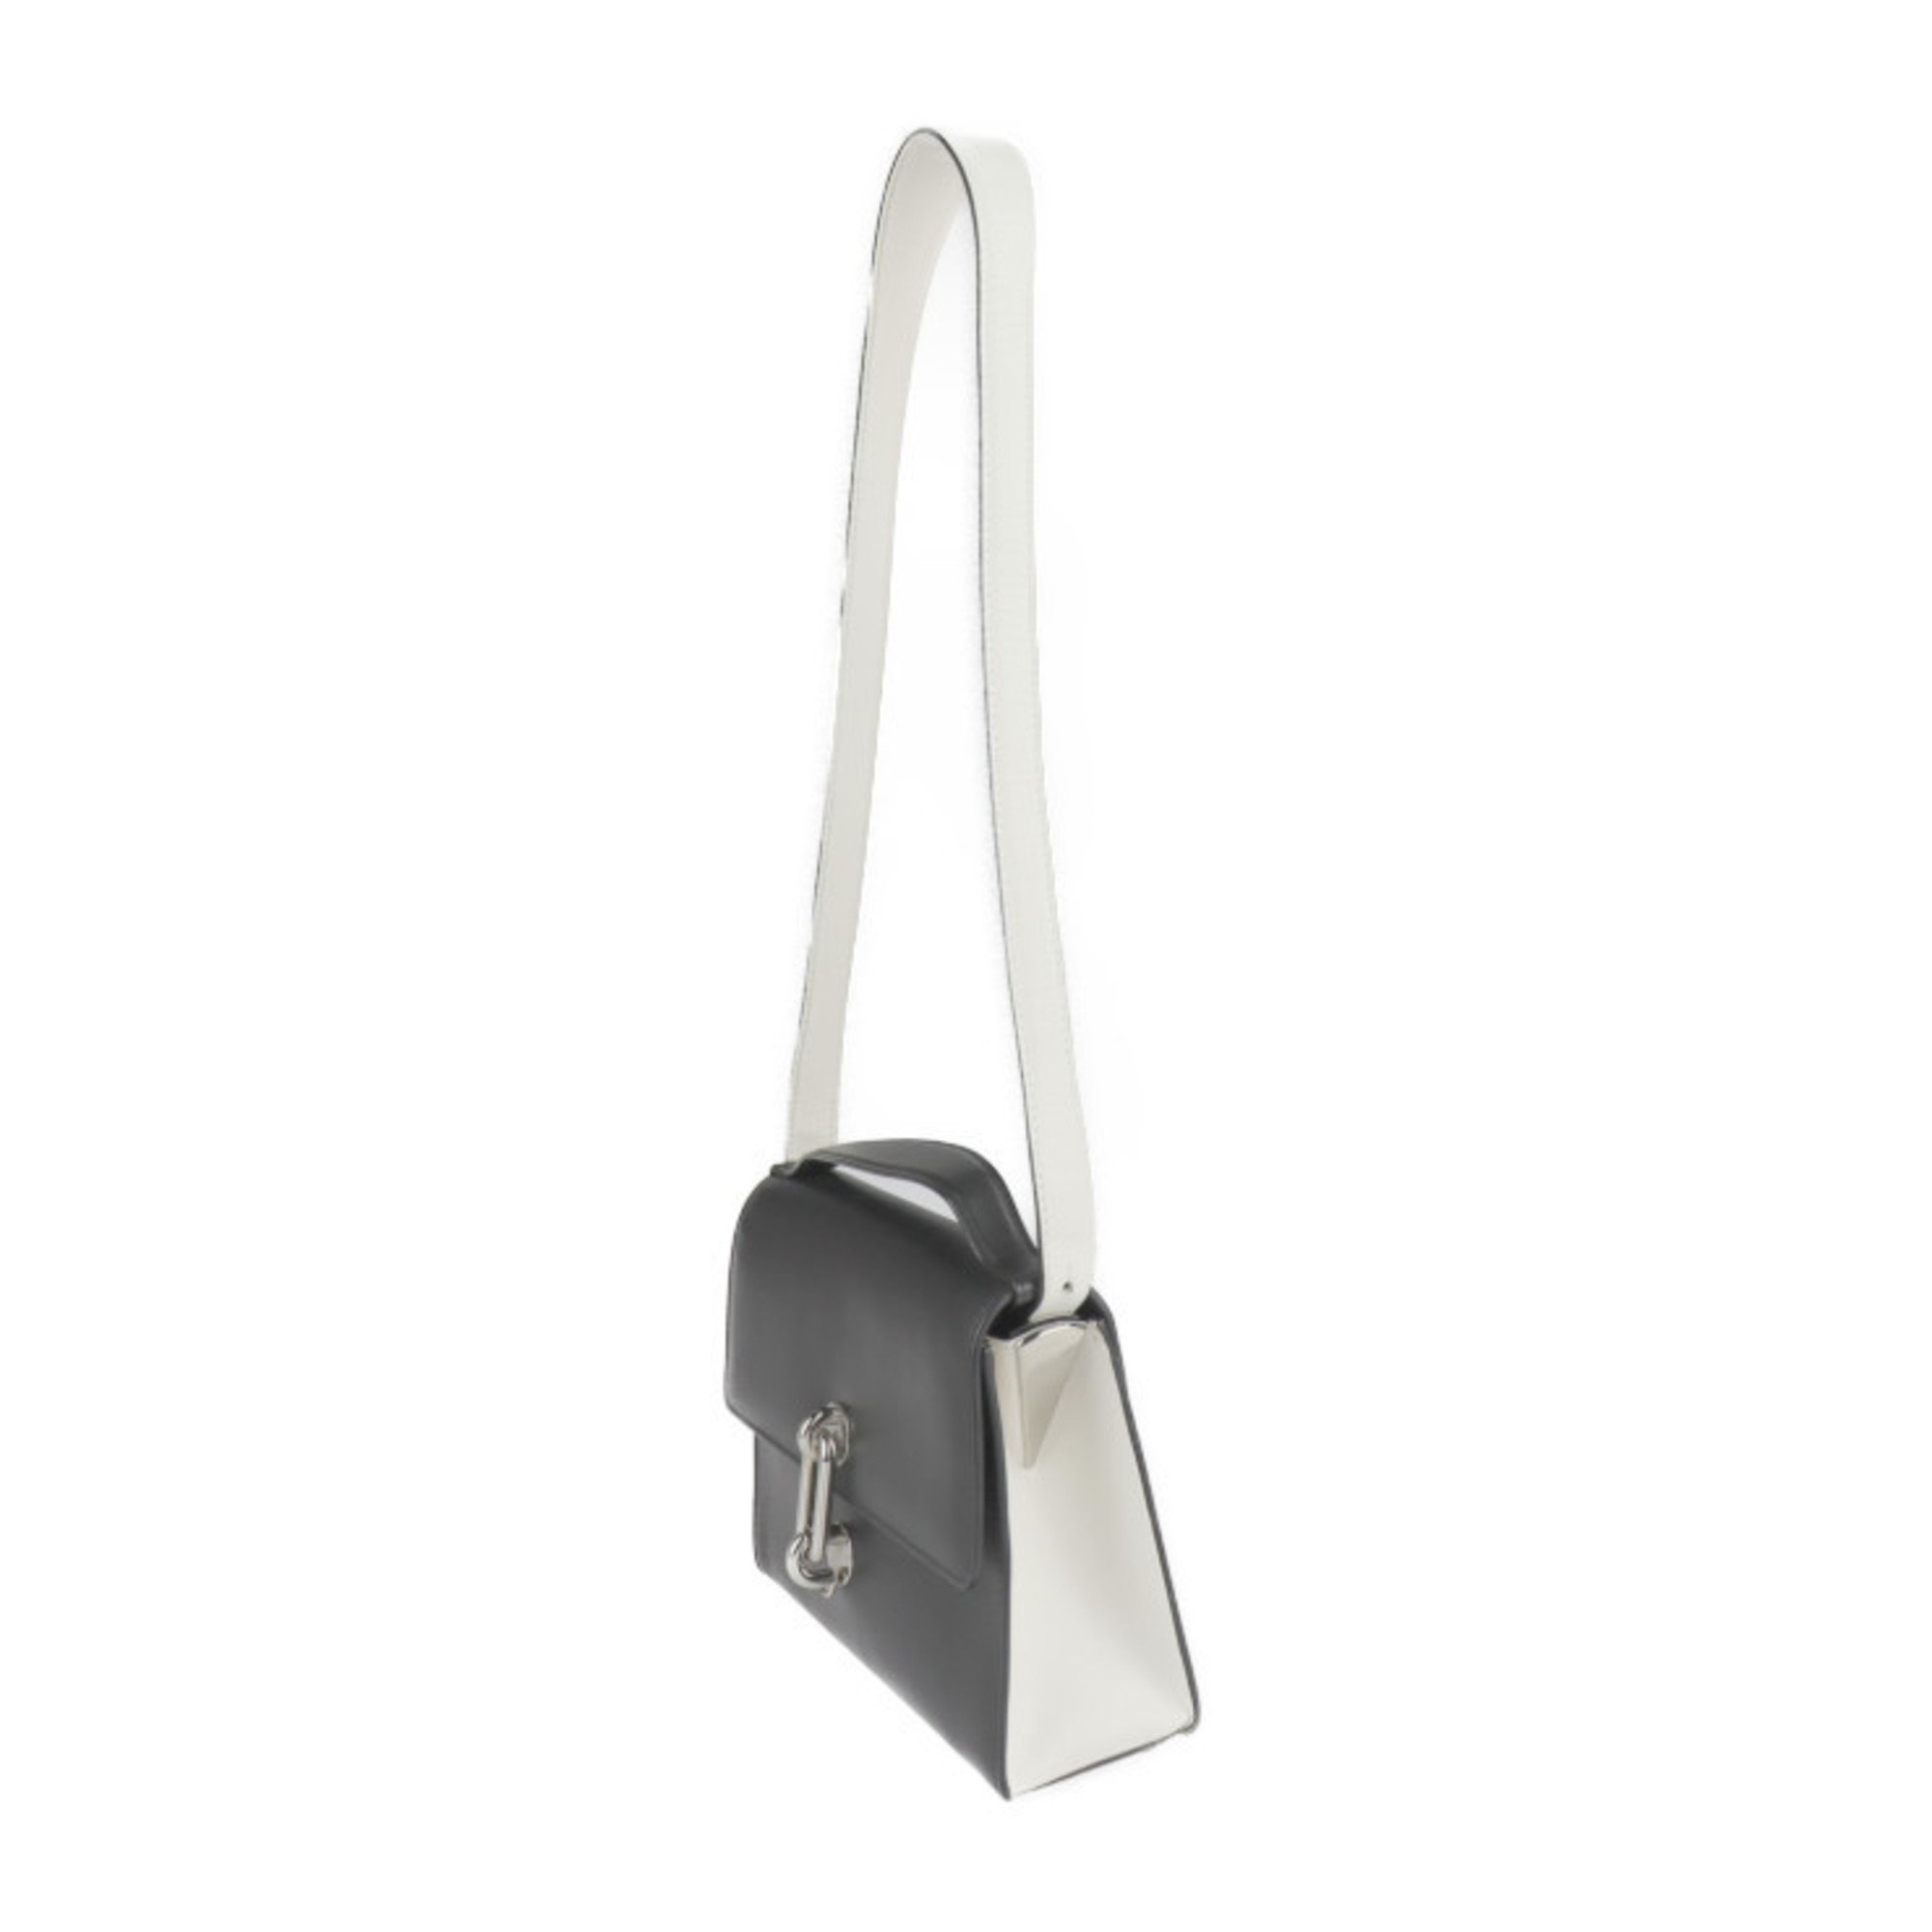 BALENCIAGA Balenciaga mini trapeze mailon handbag 331916 calf leather black ivory system silver hardware 2WAY shoulder bag